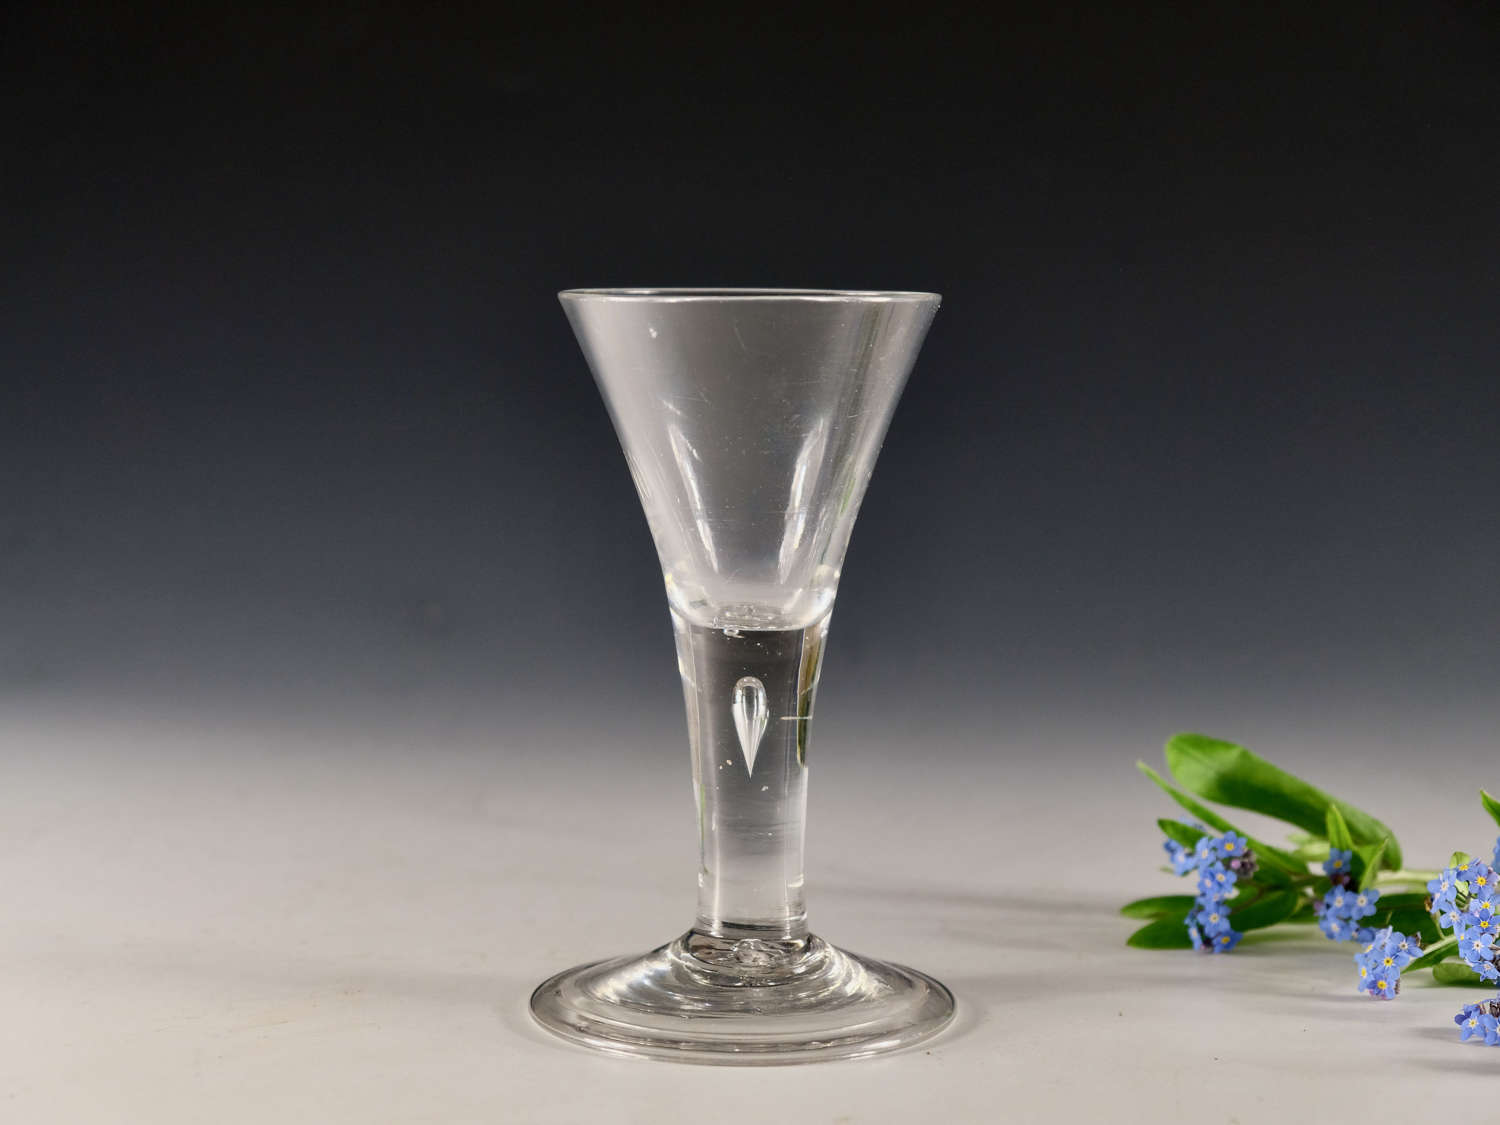 Antique glass plain stem wine glass English c1740-50